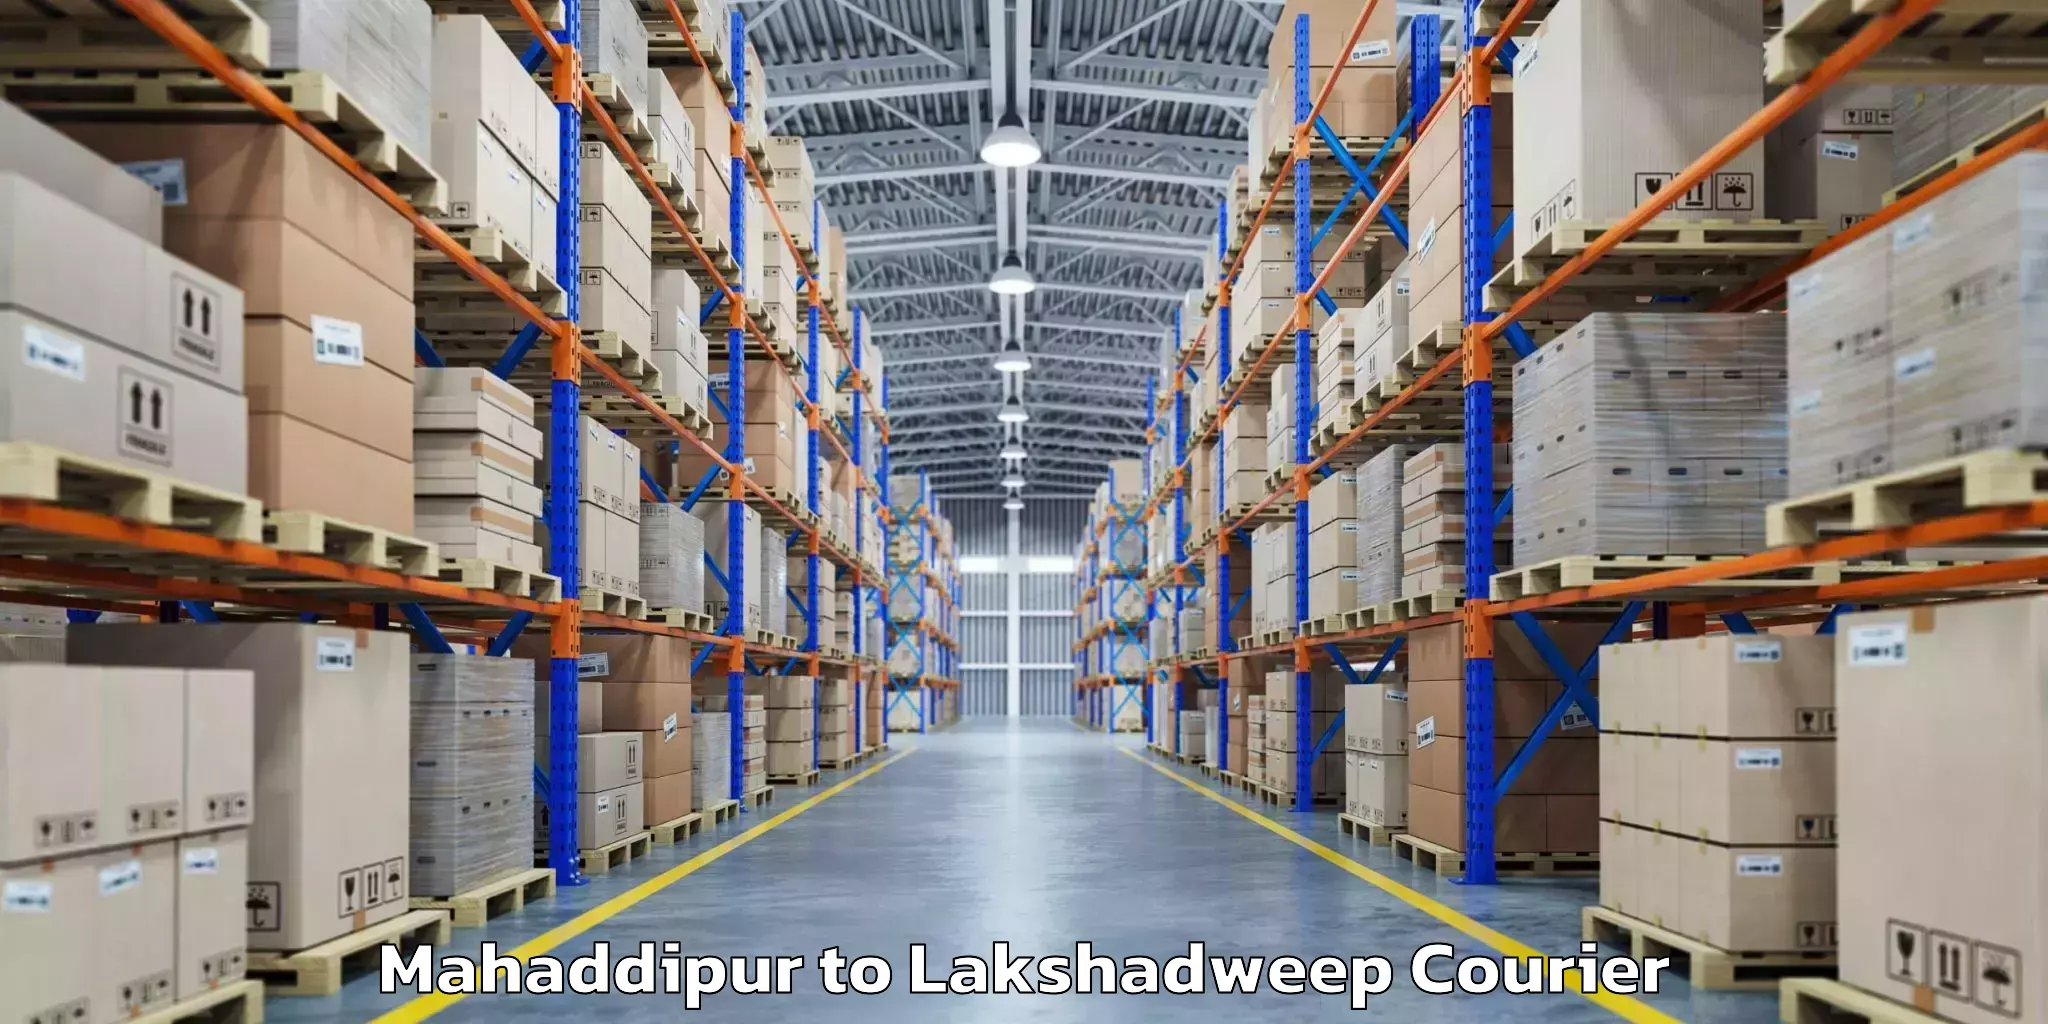 Regional luggage transport Mahaddipur to Lakshadweep